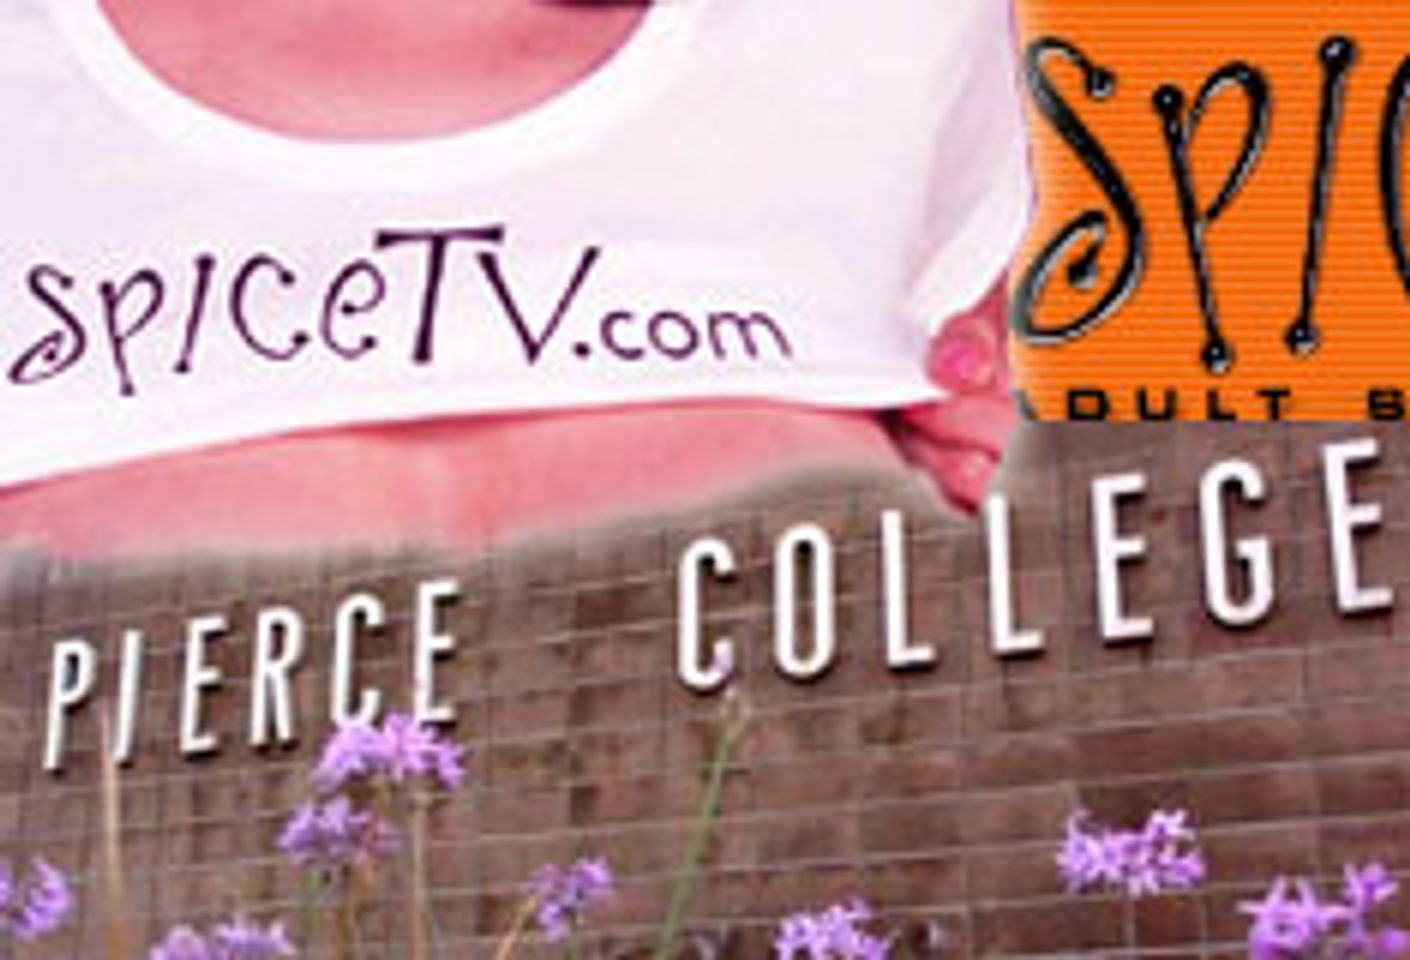 Student Newspaper Criticizes Pierce College Over Spice TV Shoot